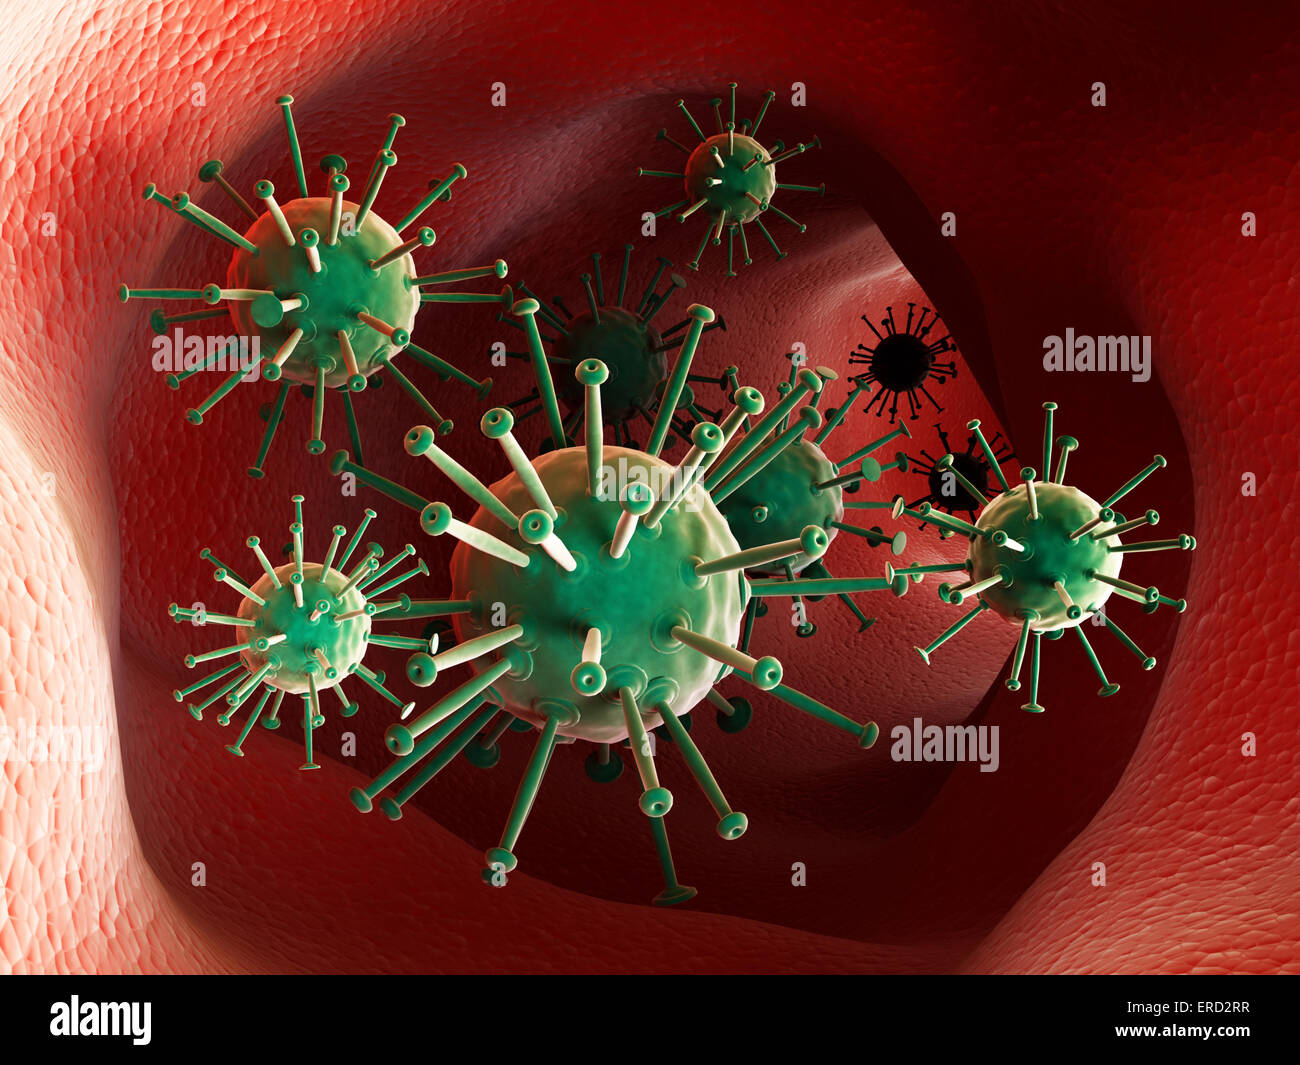 Les virus vert insiden veine humaine. Banque D'Images